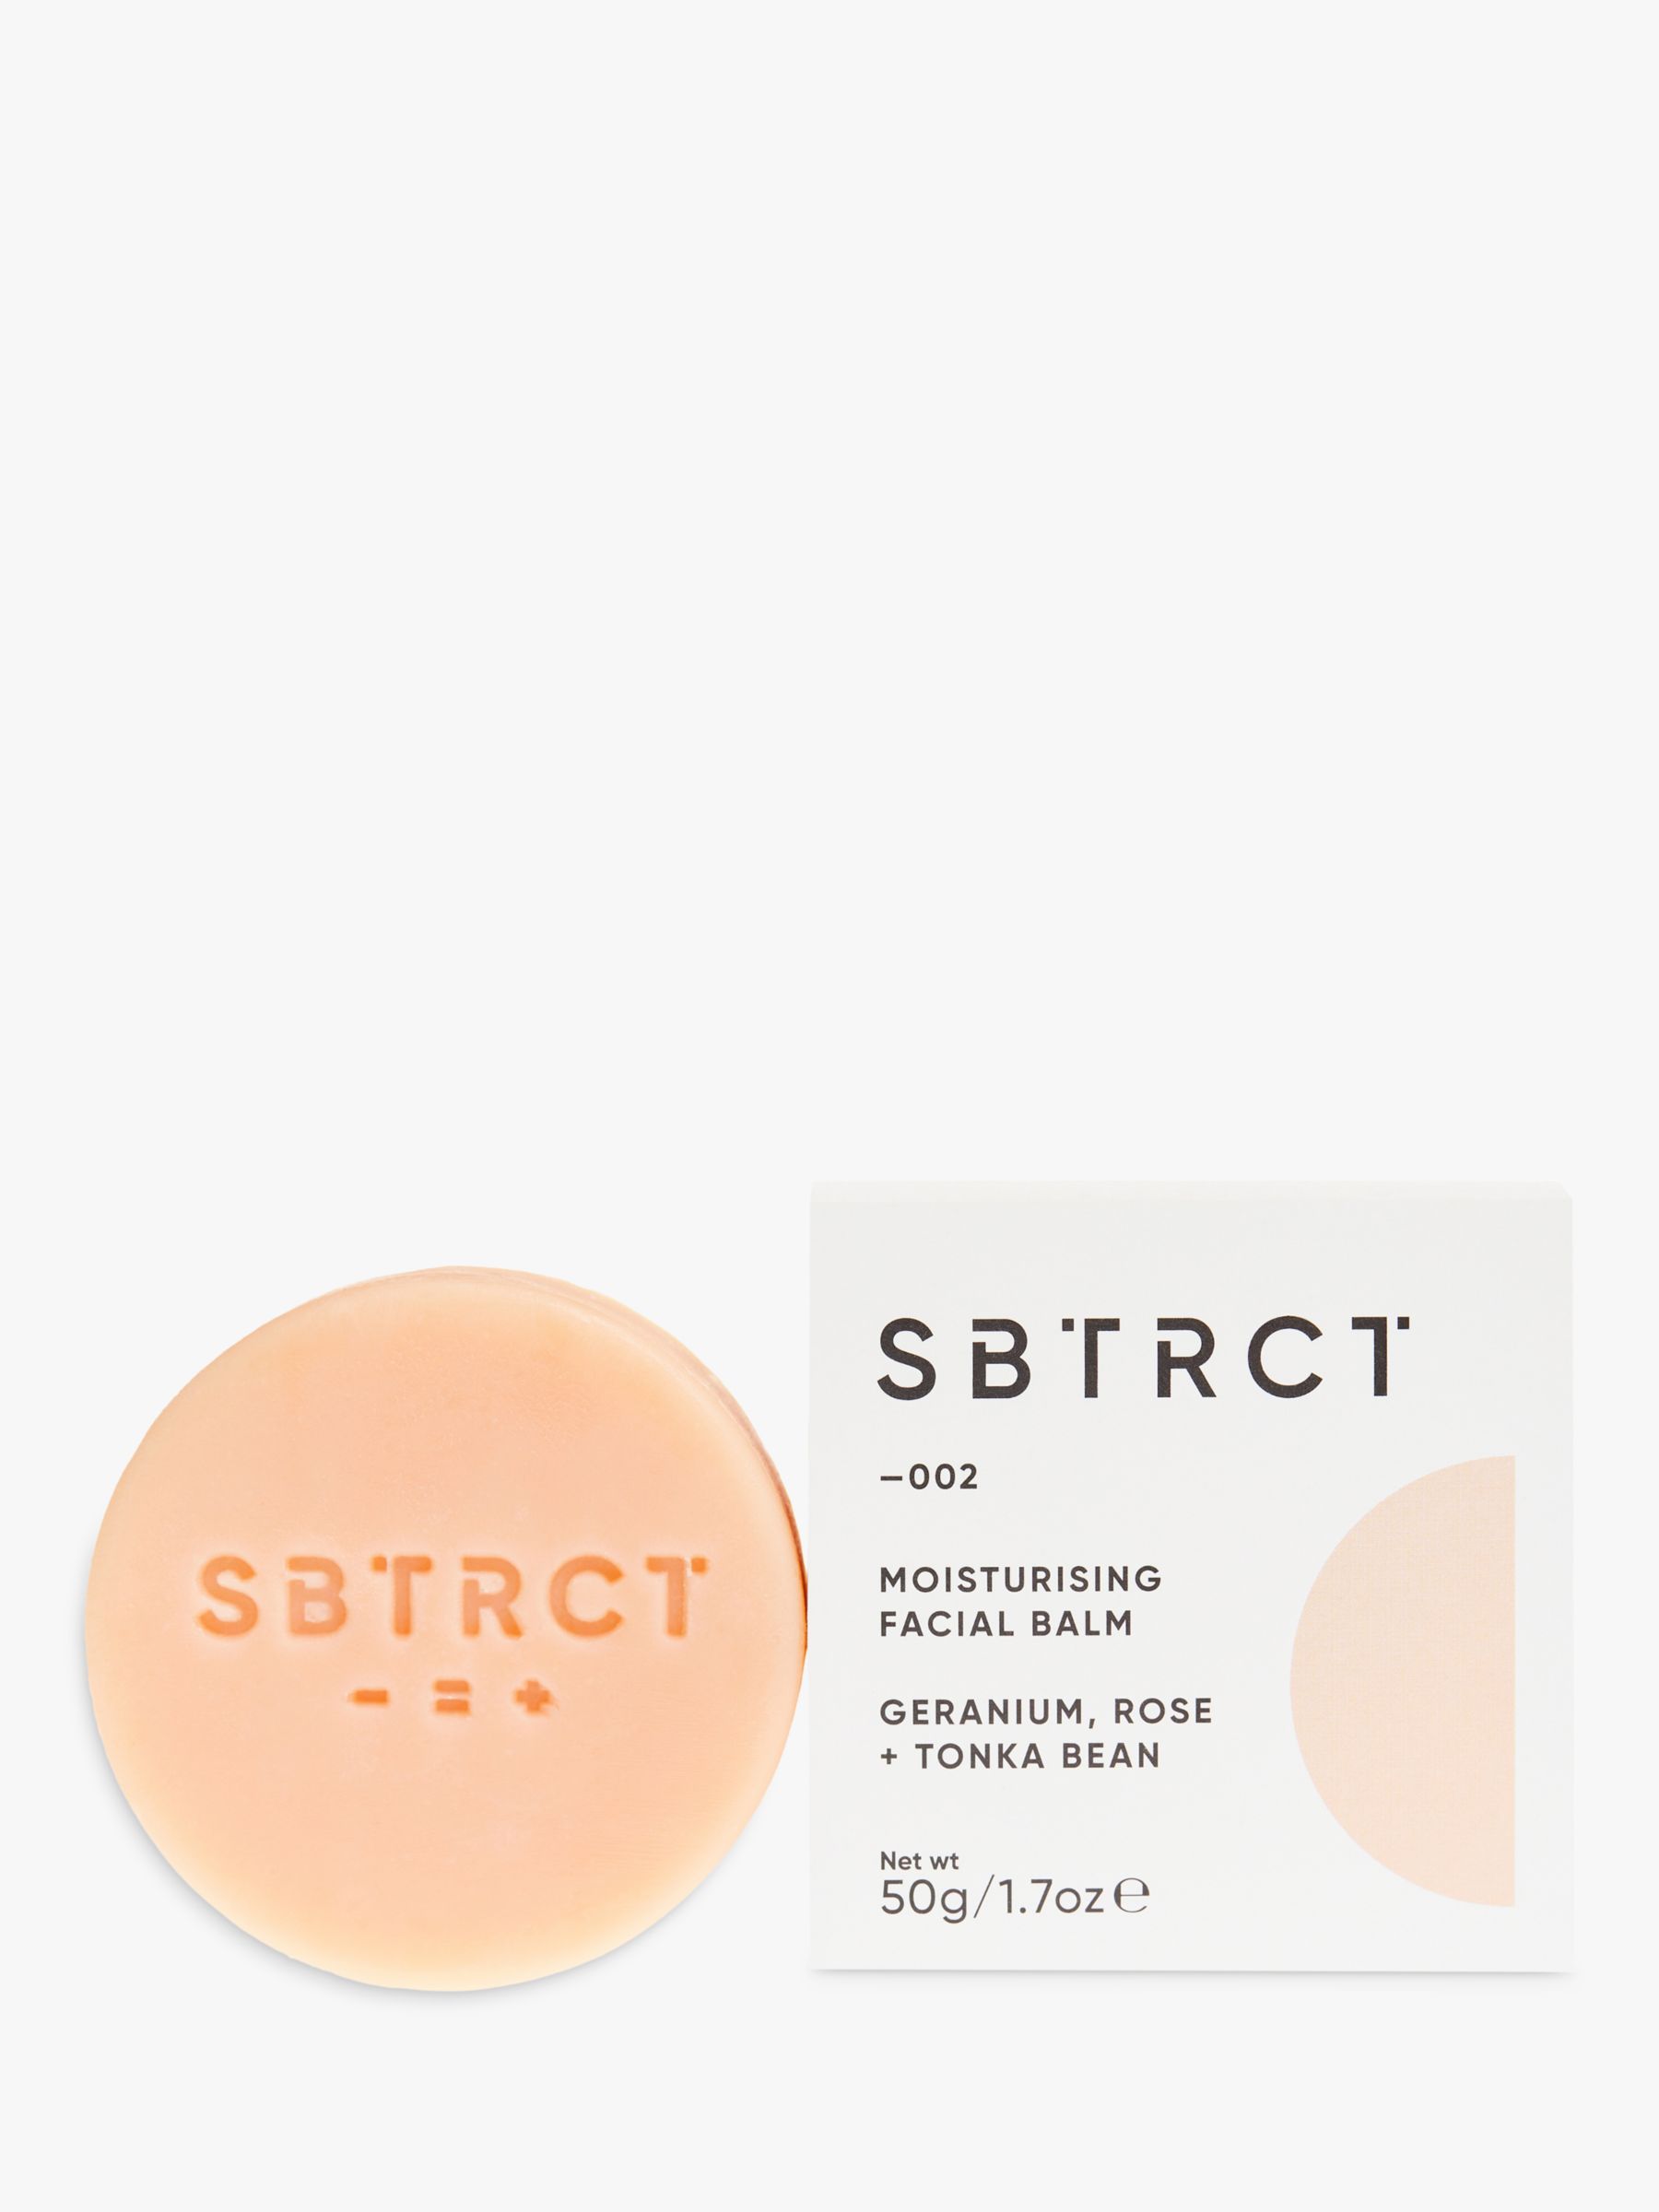 SBTRCT Moisturising Facial Balm Refill Bar, 50g 1